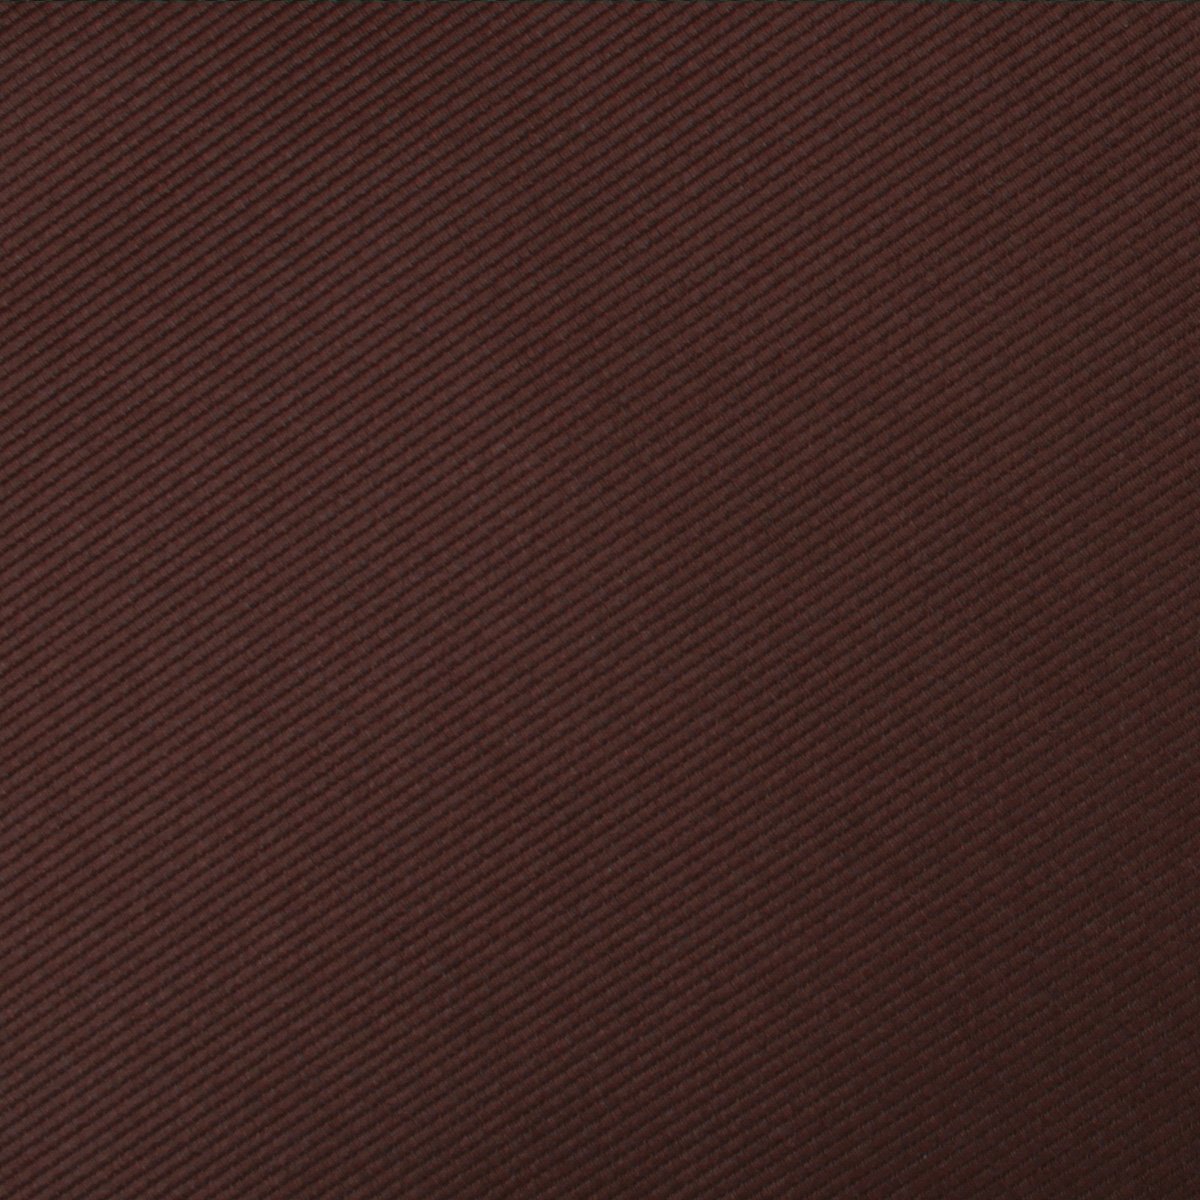 Chocolate Brown Twill Pocket Square Fabric